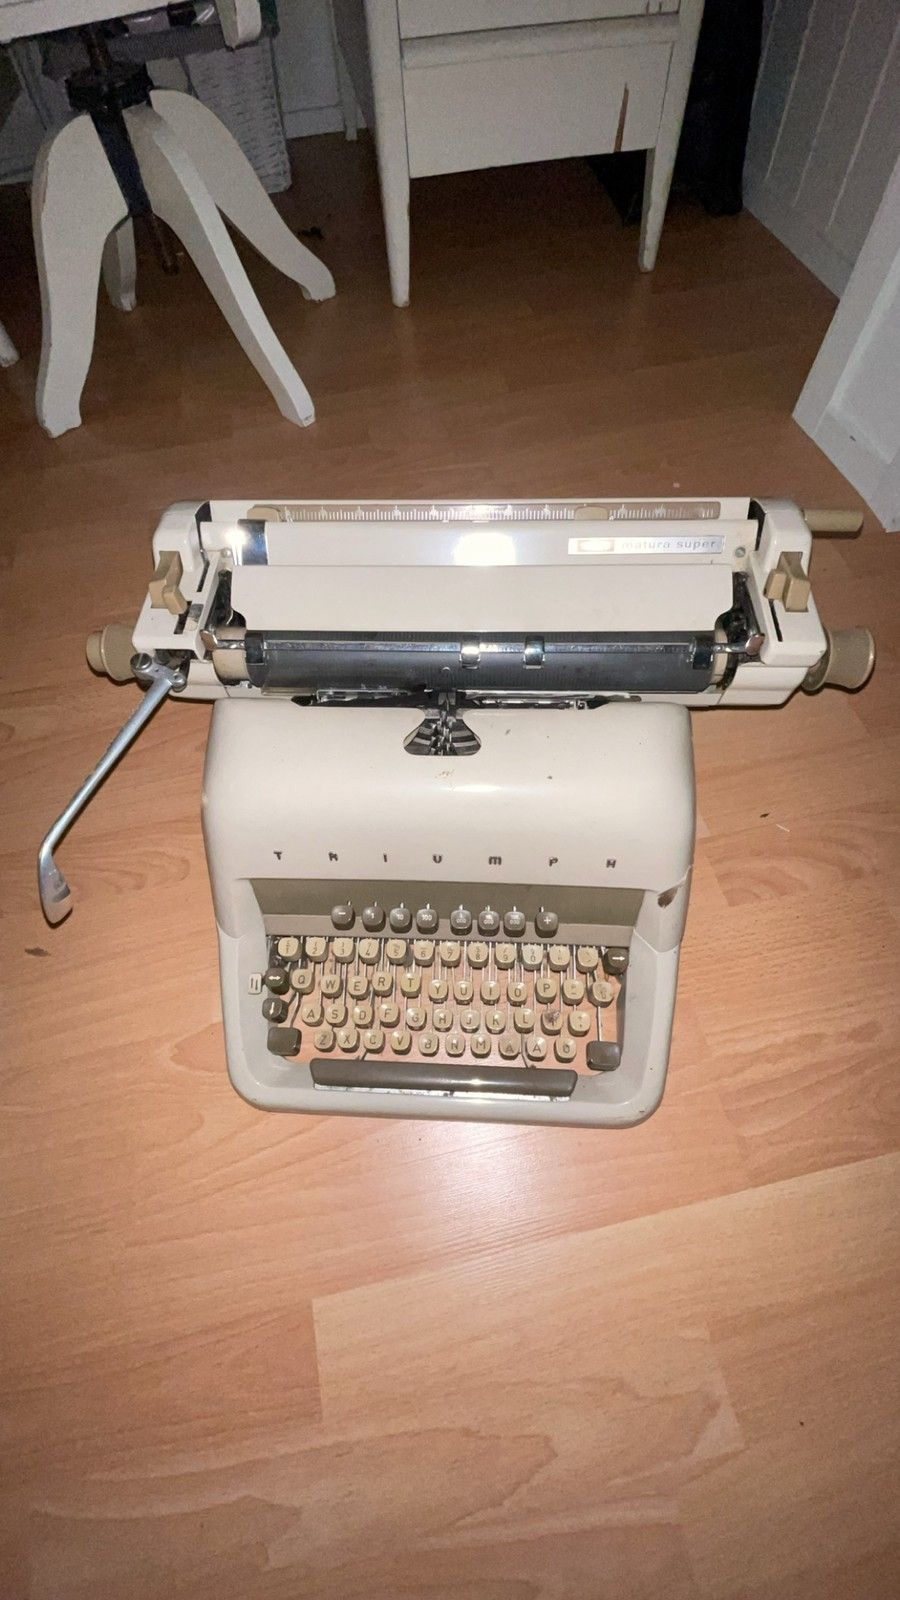 Triumph matura super kirjoituskone 1960